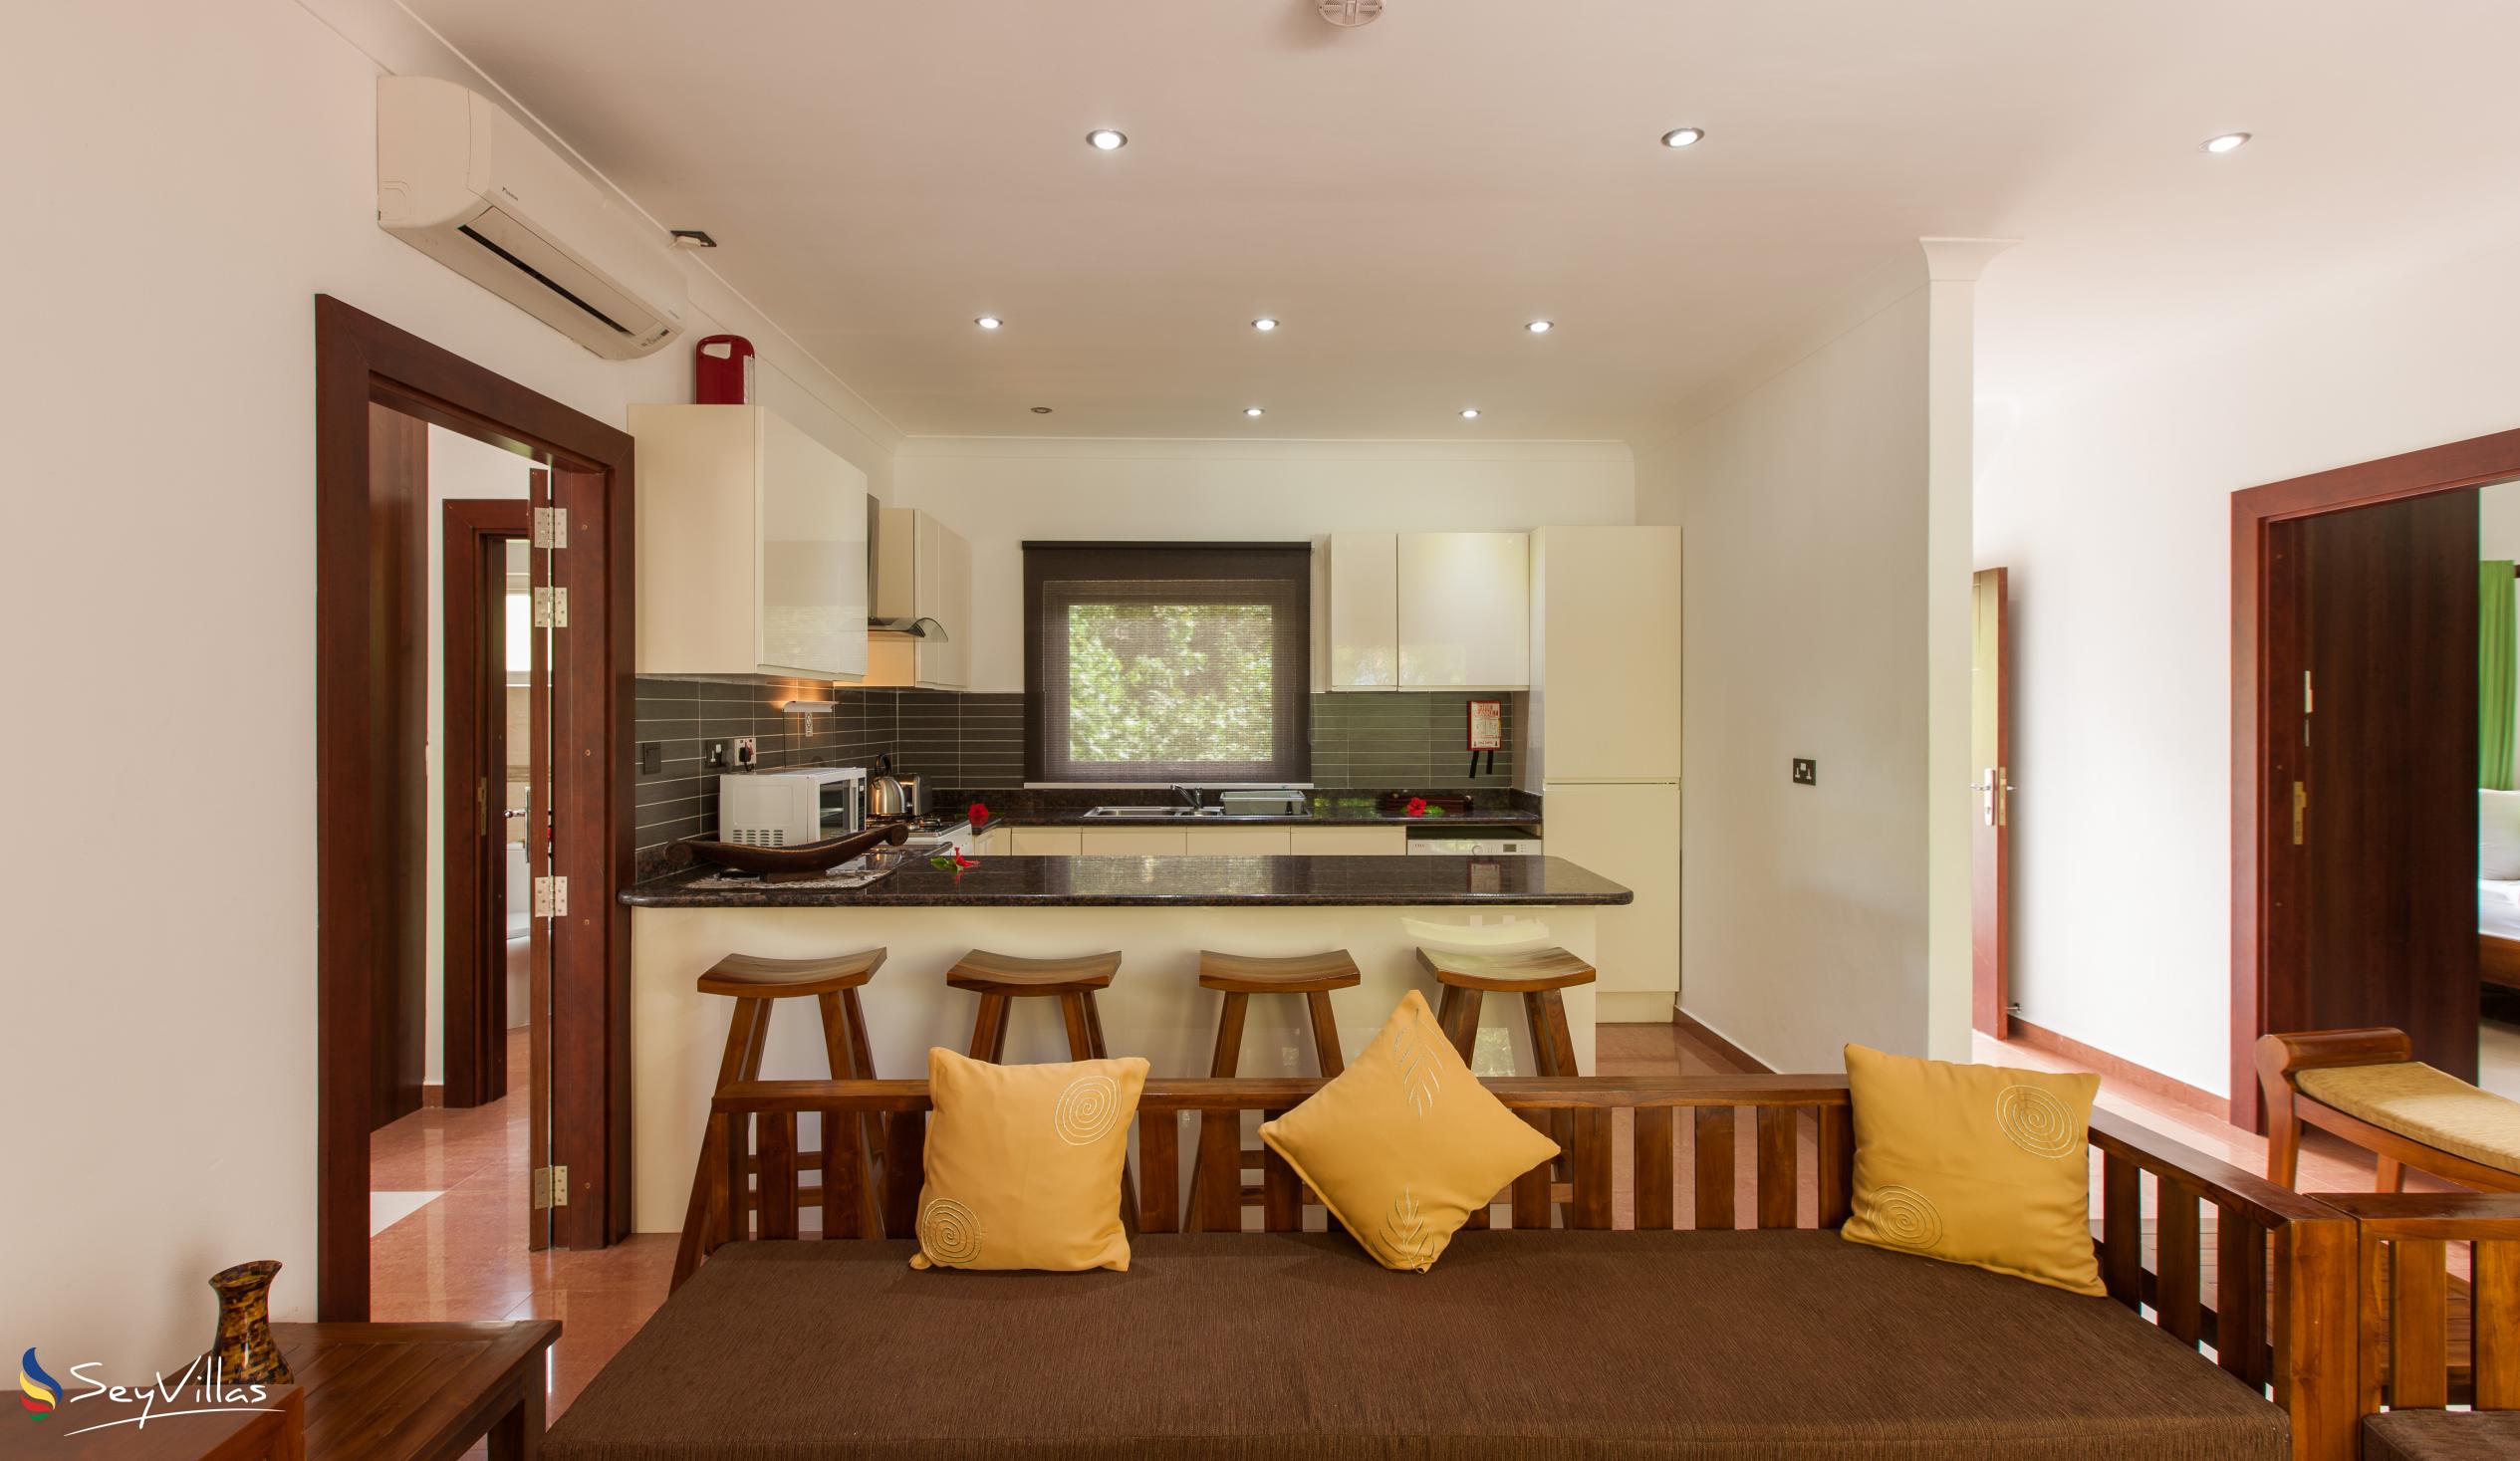 Photo 69: YASAD Luxury Beach Residence - 3-Bedroom Apartment - Praslin (Seychelles)